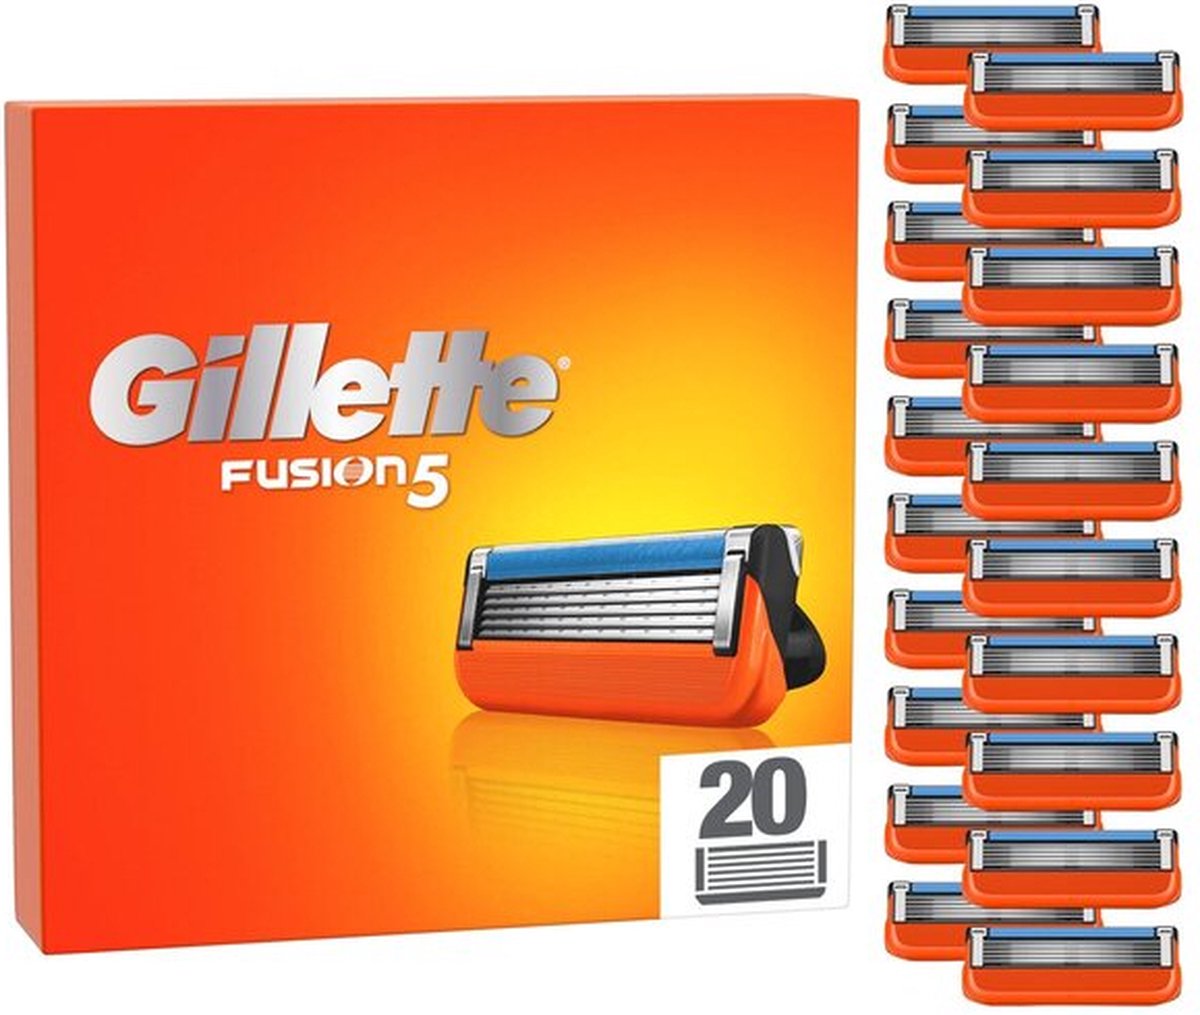 Gillette Fusion 5 value pack 20 stuks - Gillette